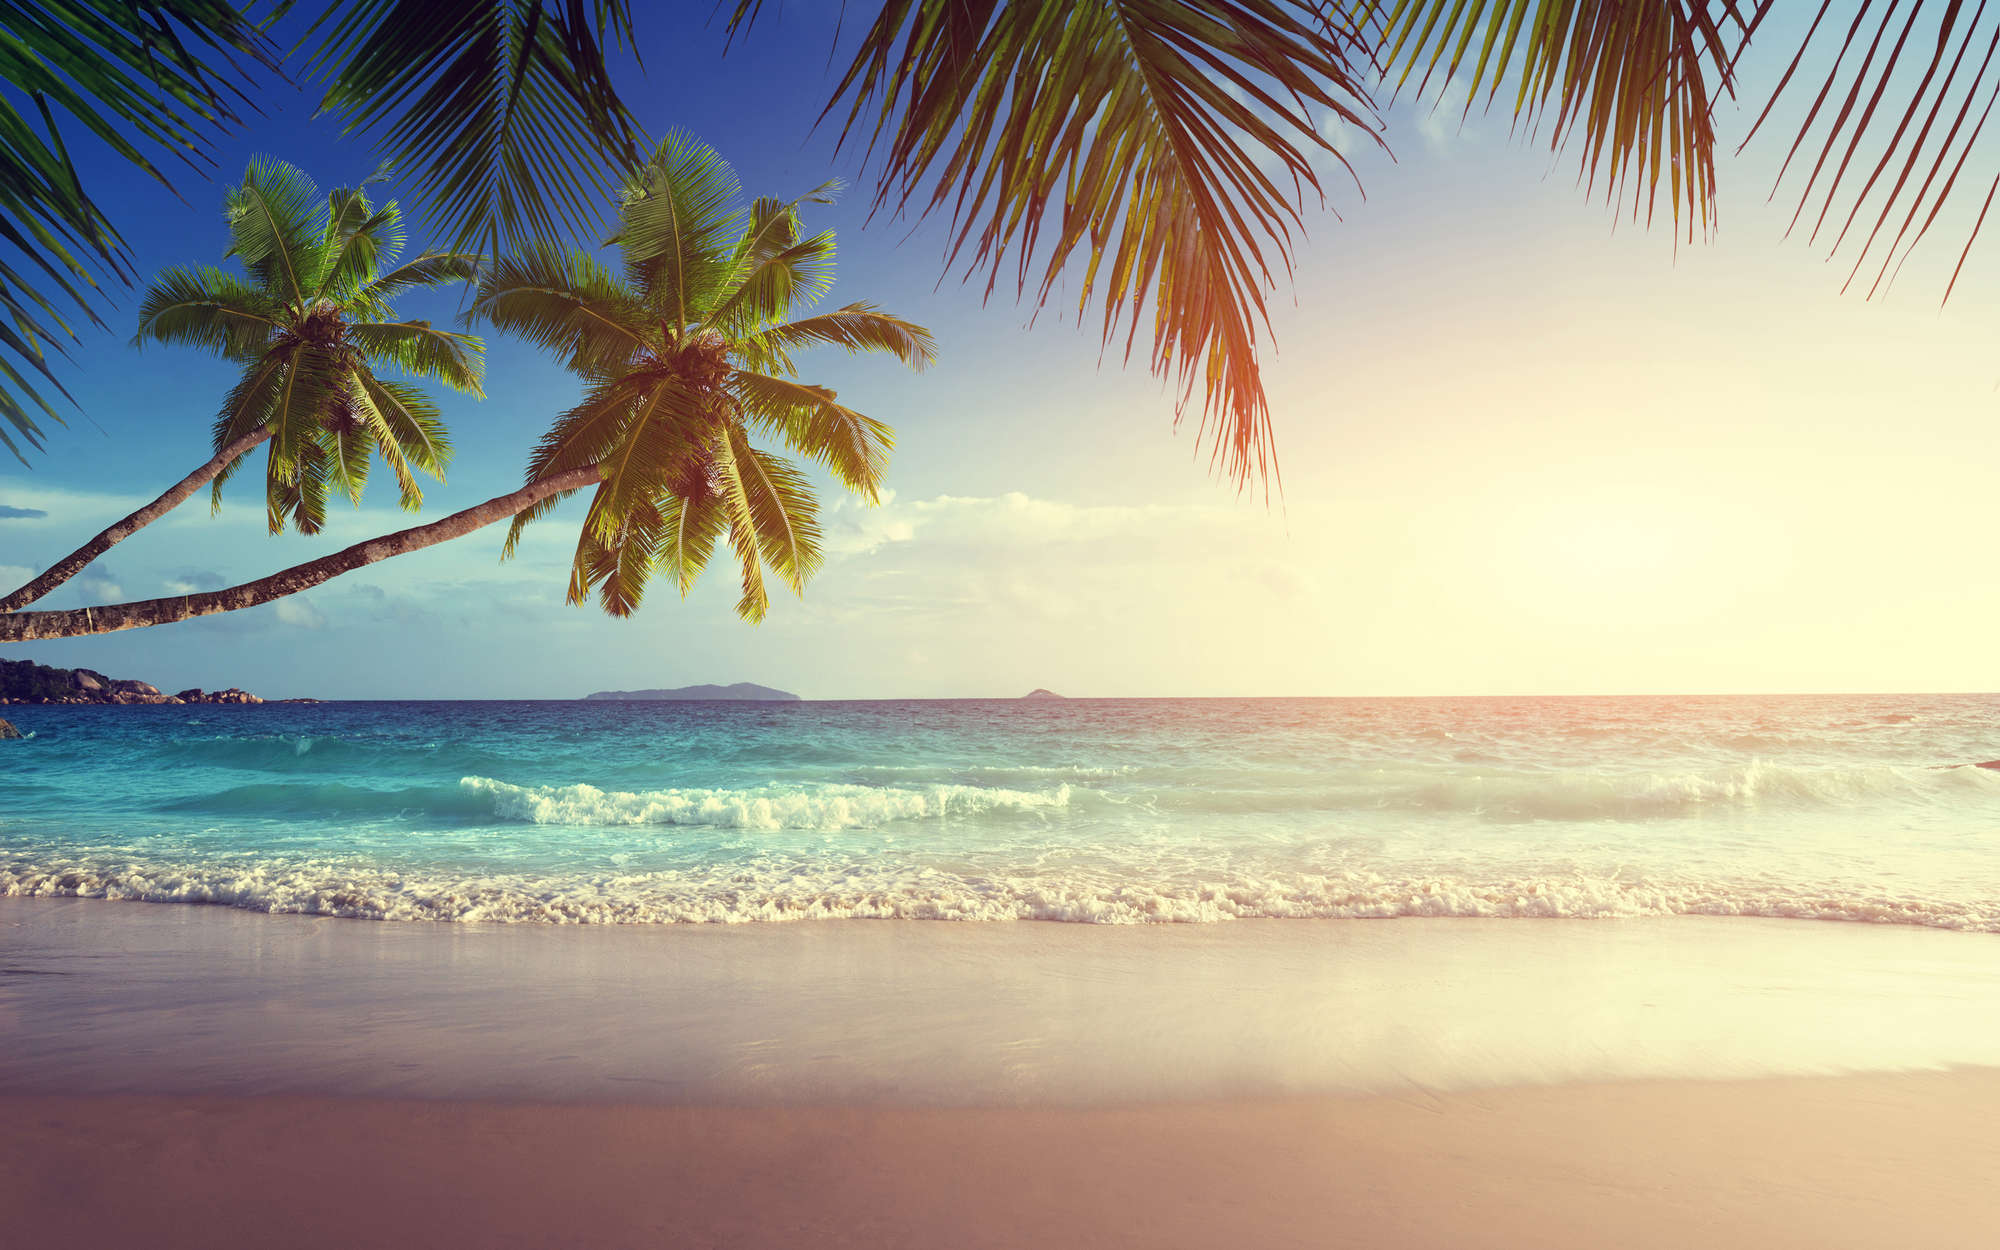             Fototapete Seychellen mit Palmen – Perlmutt Glattvlies
        